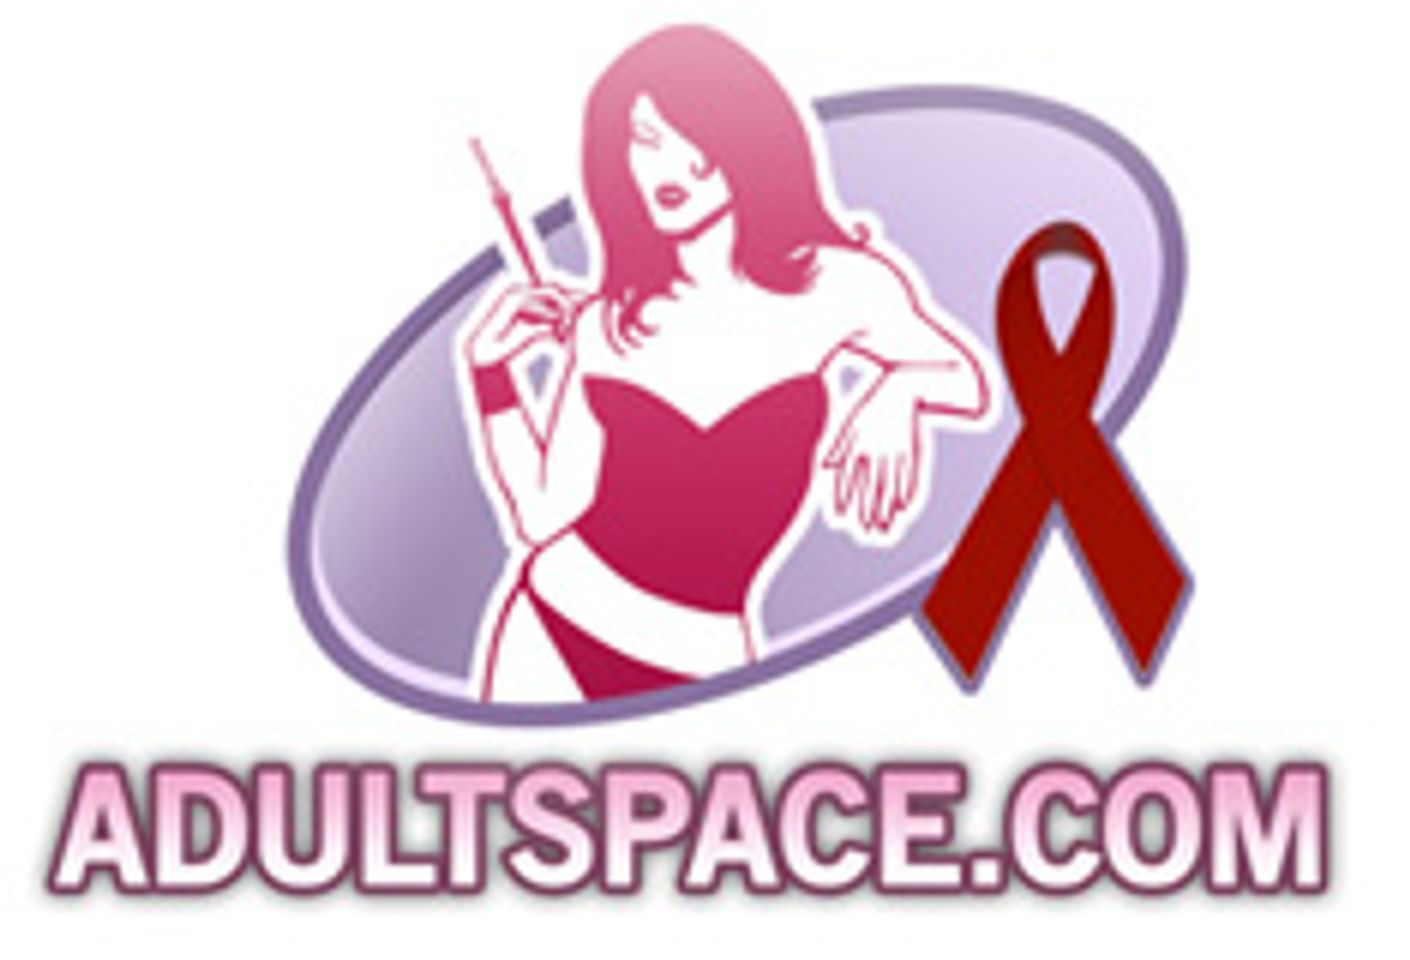 AdultSpace.com Recognizes World AIDS Day — Dec. 1